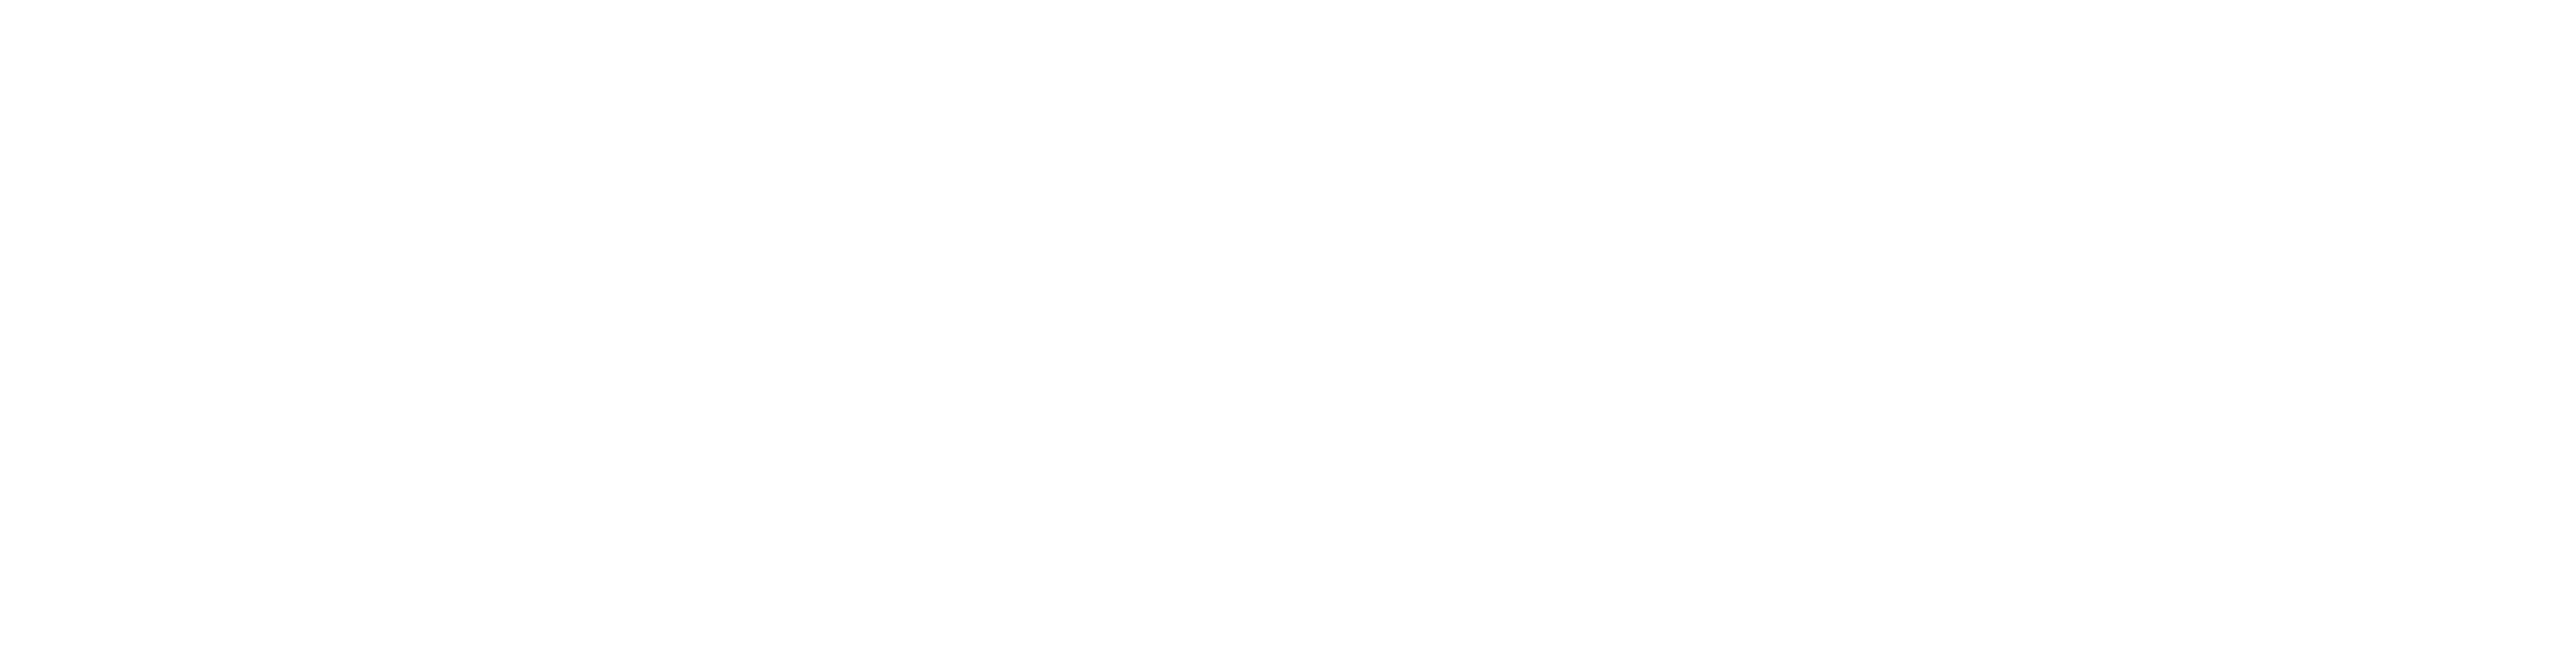 2407graphics